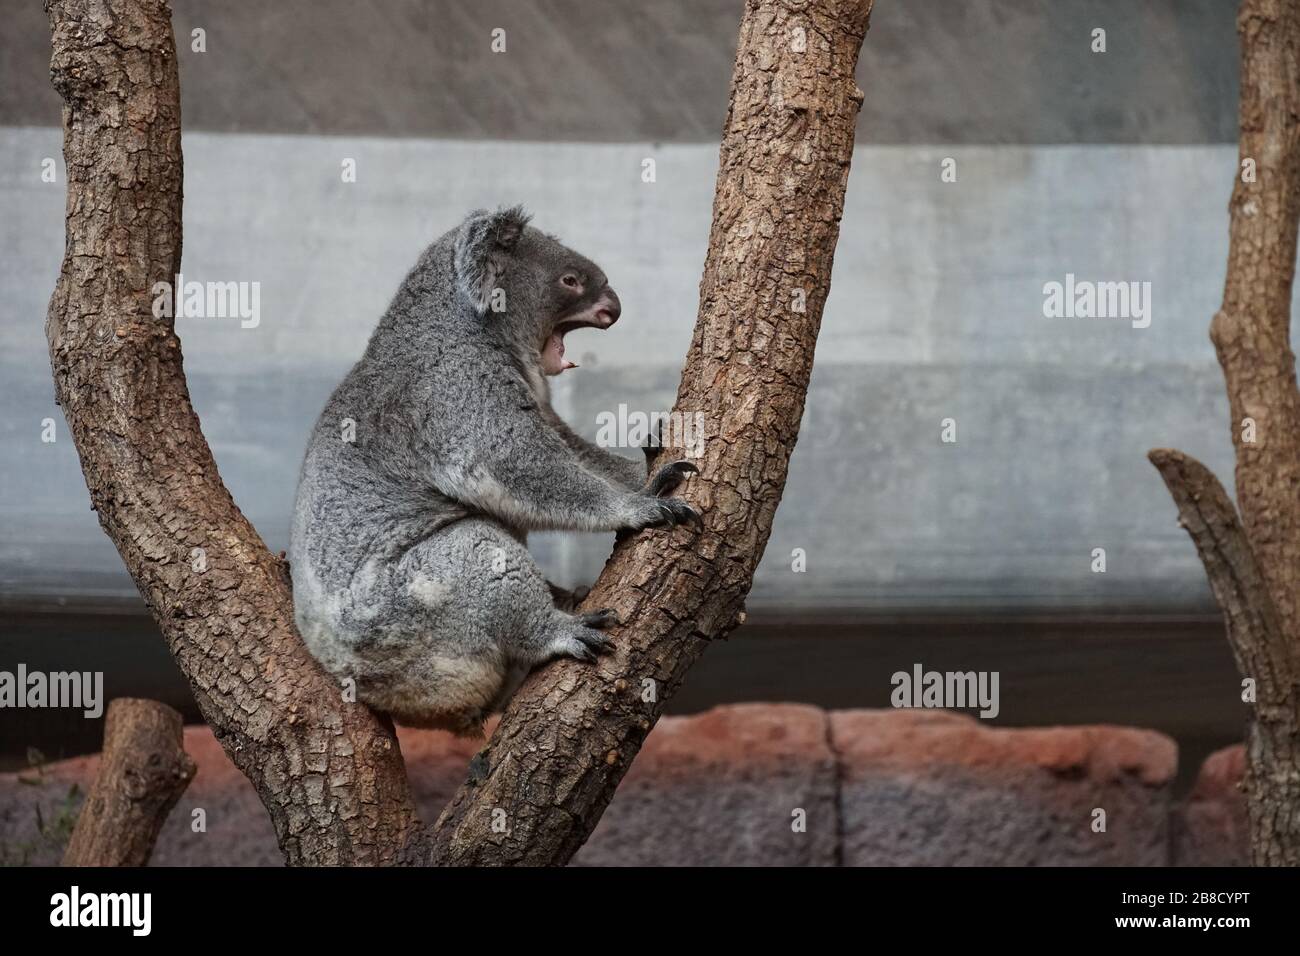 Yawning koala, Phascolarctos cinereus, arboreal herbivorous marsupial living in Australia, sitting in a tree in lateral view Stock Photo